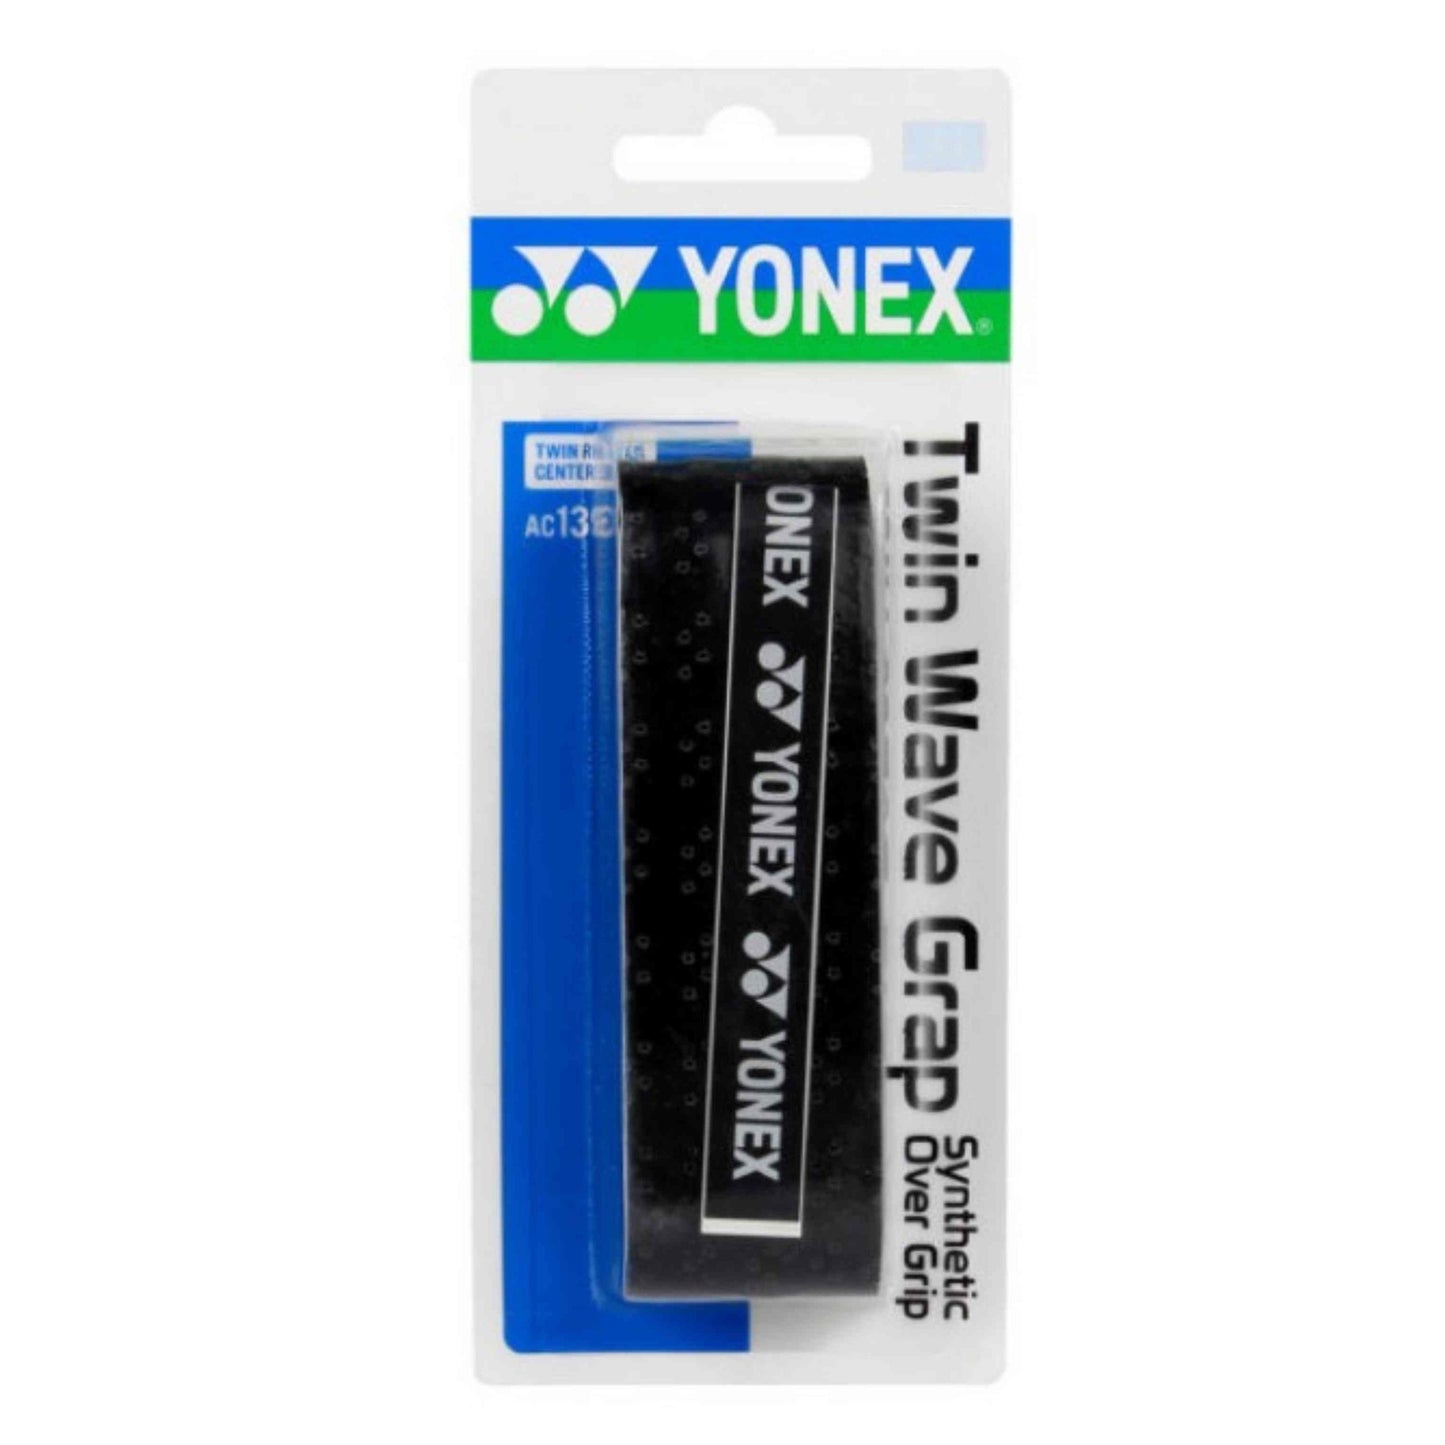 Yonex AC139EX Twin Wave Grap Synthetic Over Grip - Best Price online Prokicksports.com